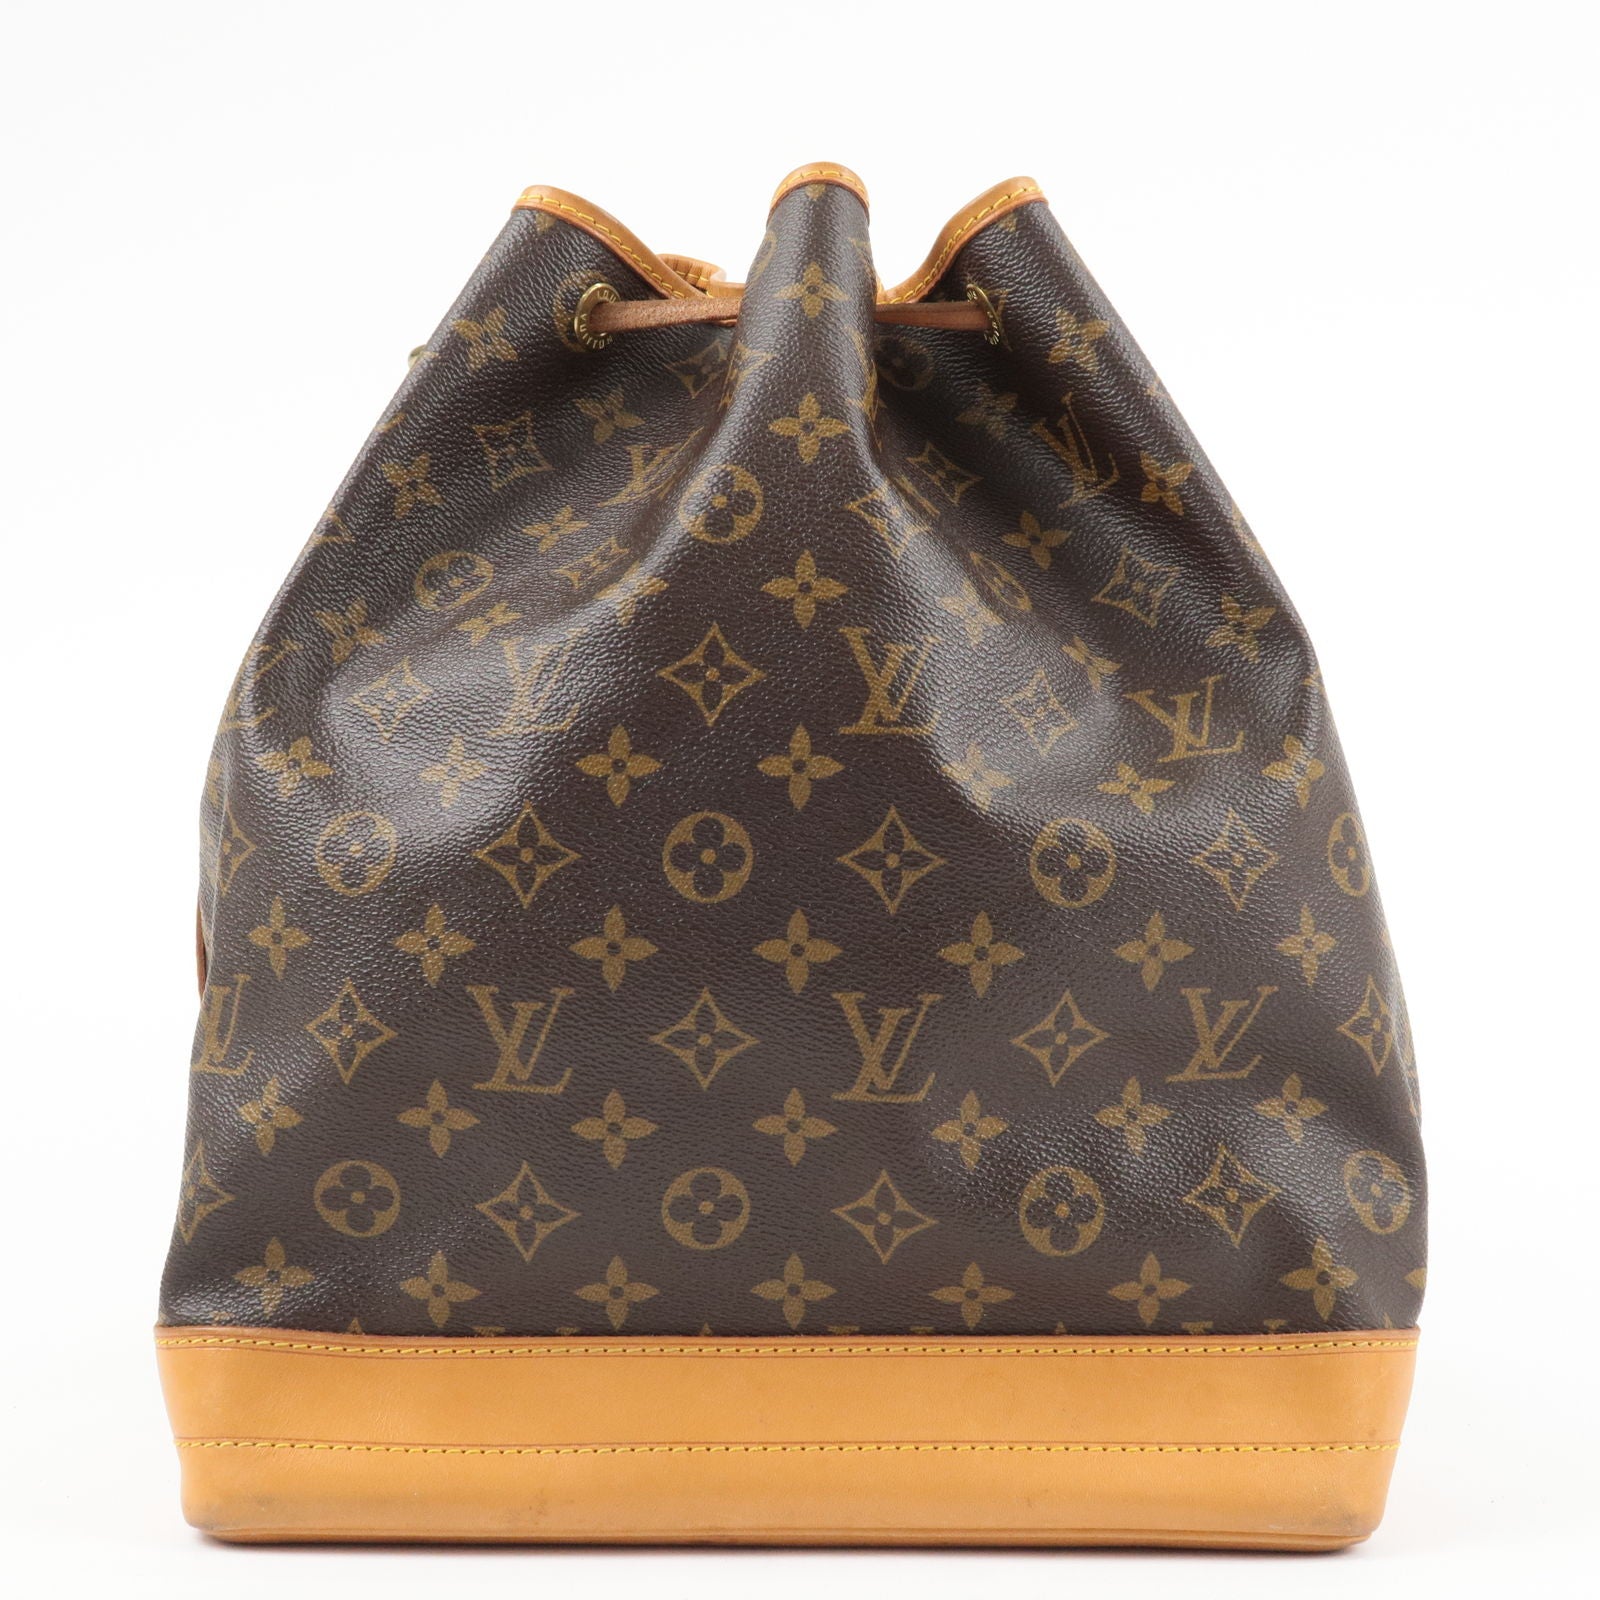 Louis-Vuitton-Damier-Olaf-PM-Cross-Body-Shoulder-Bag-N41442